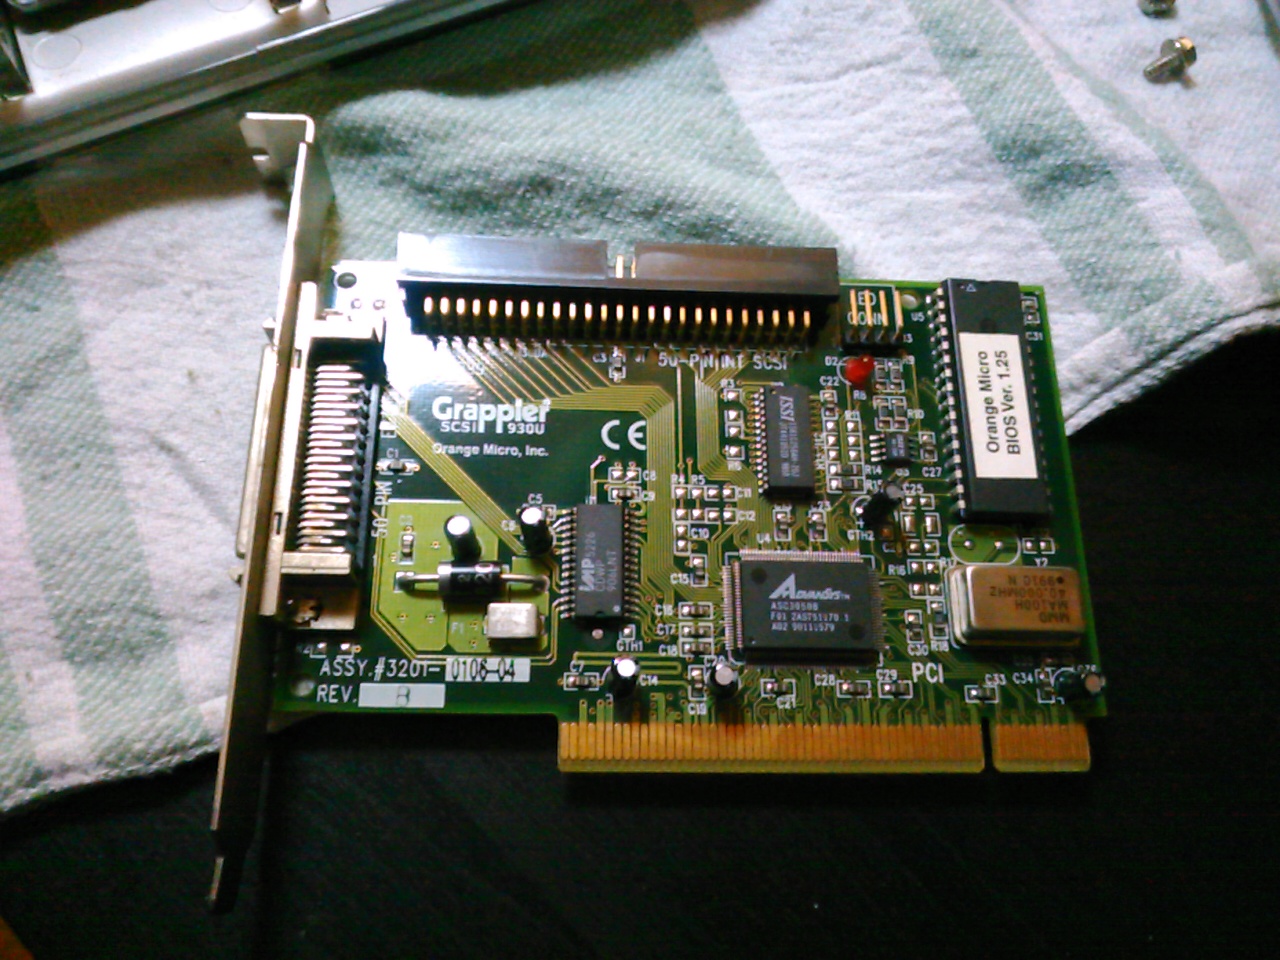 Orange Micro Grappler SCSI 930U